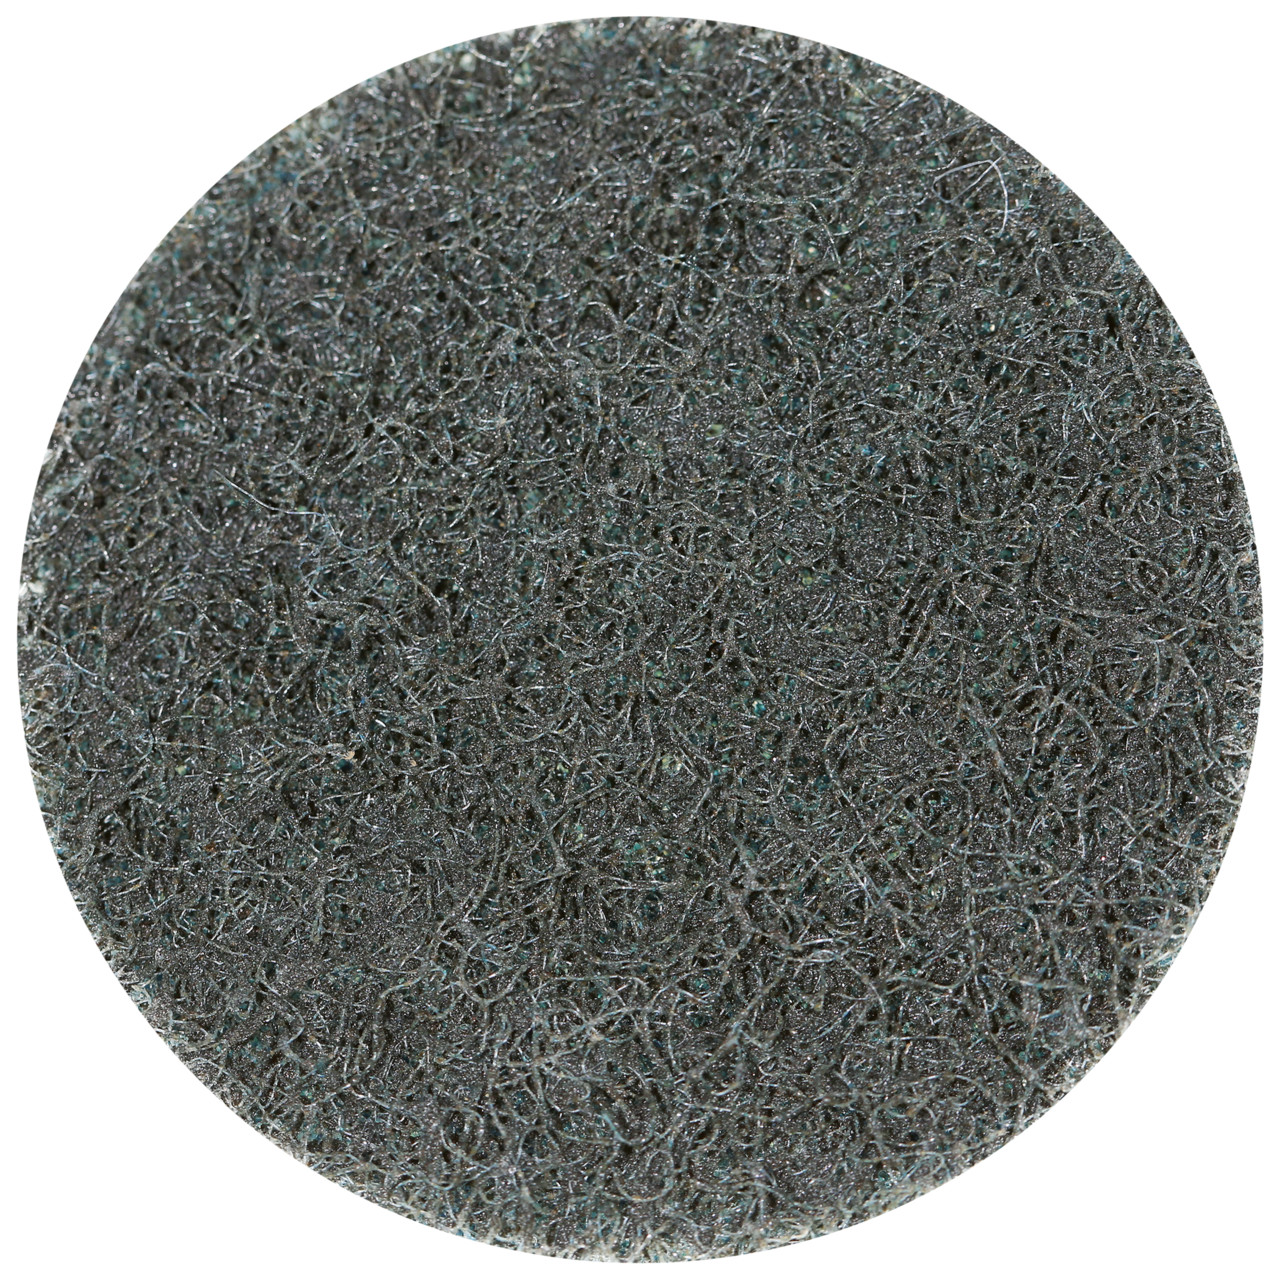 Tyrolit SCM QUICK CHANGE DISC Dimensione 75xR Per acciaio, acciaio inox, metalli non ferrosi, plastica e legno, EXTRA LARGE, forma: QDISC, Art. 34072700